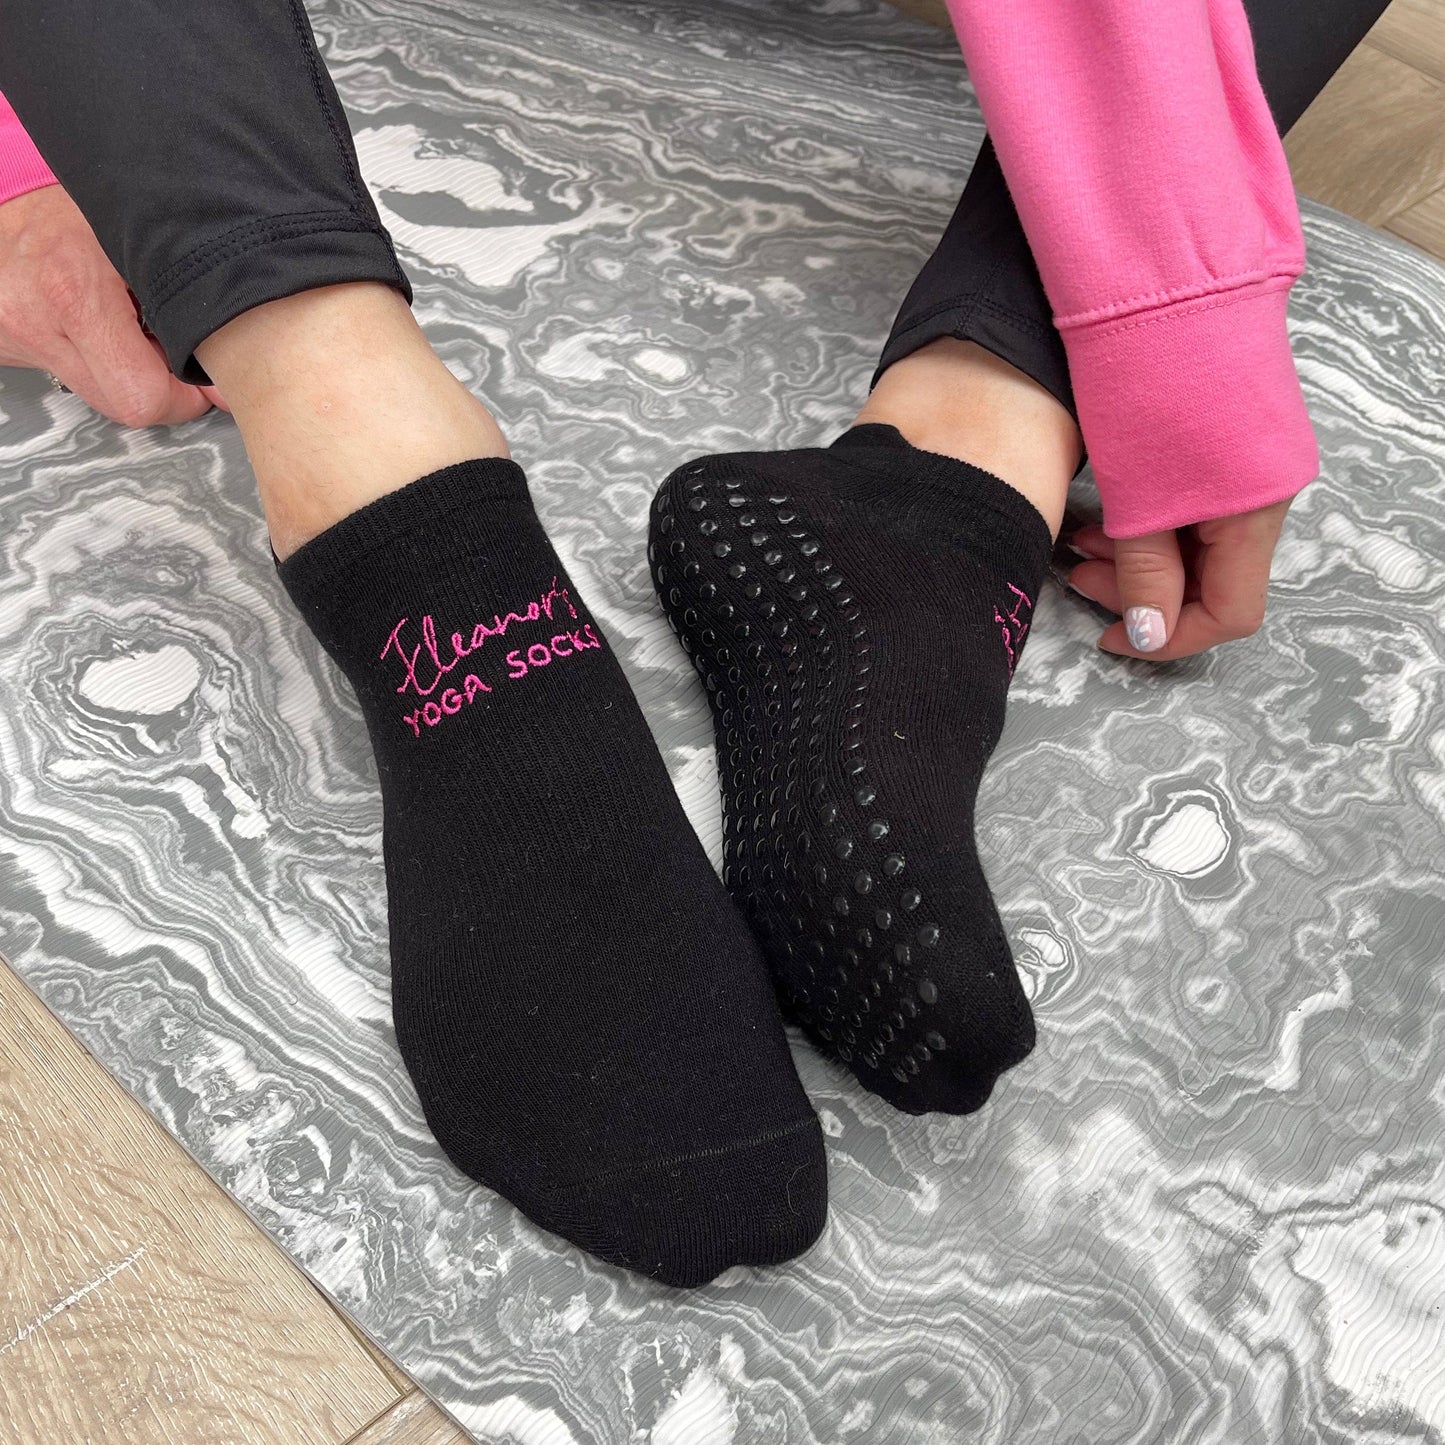 Embroidered Yoga Socks